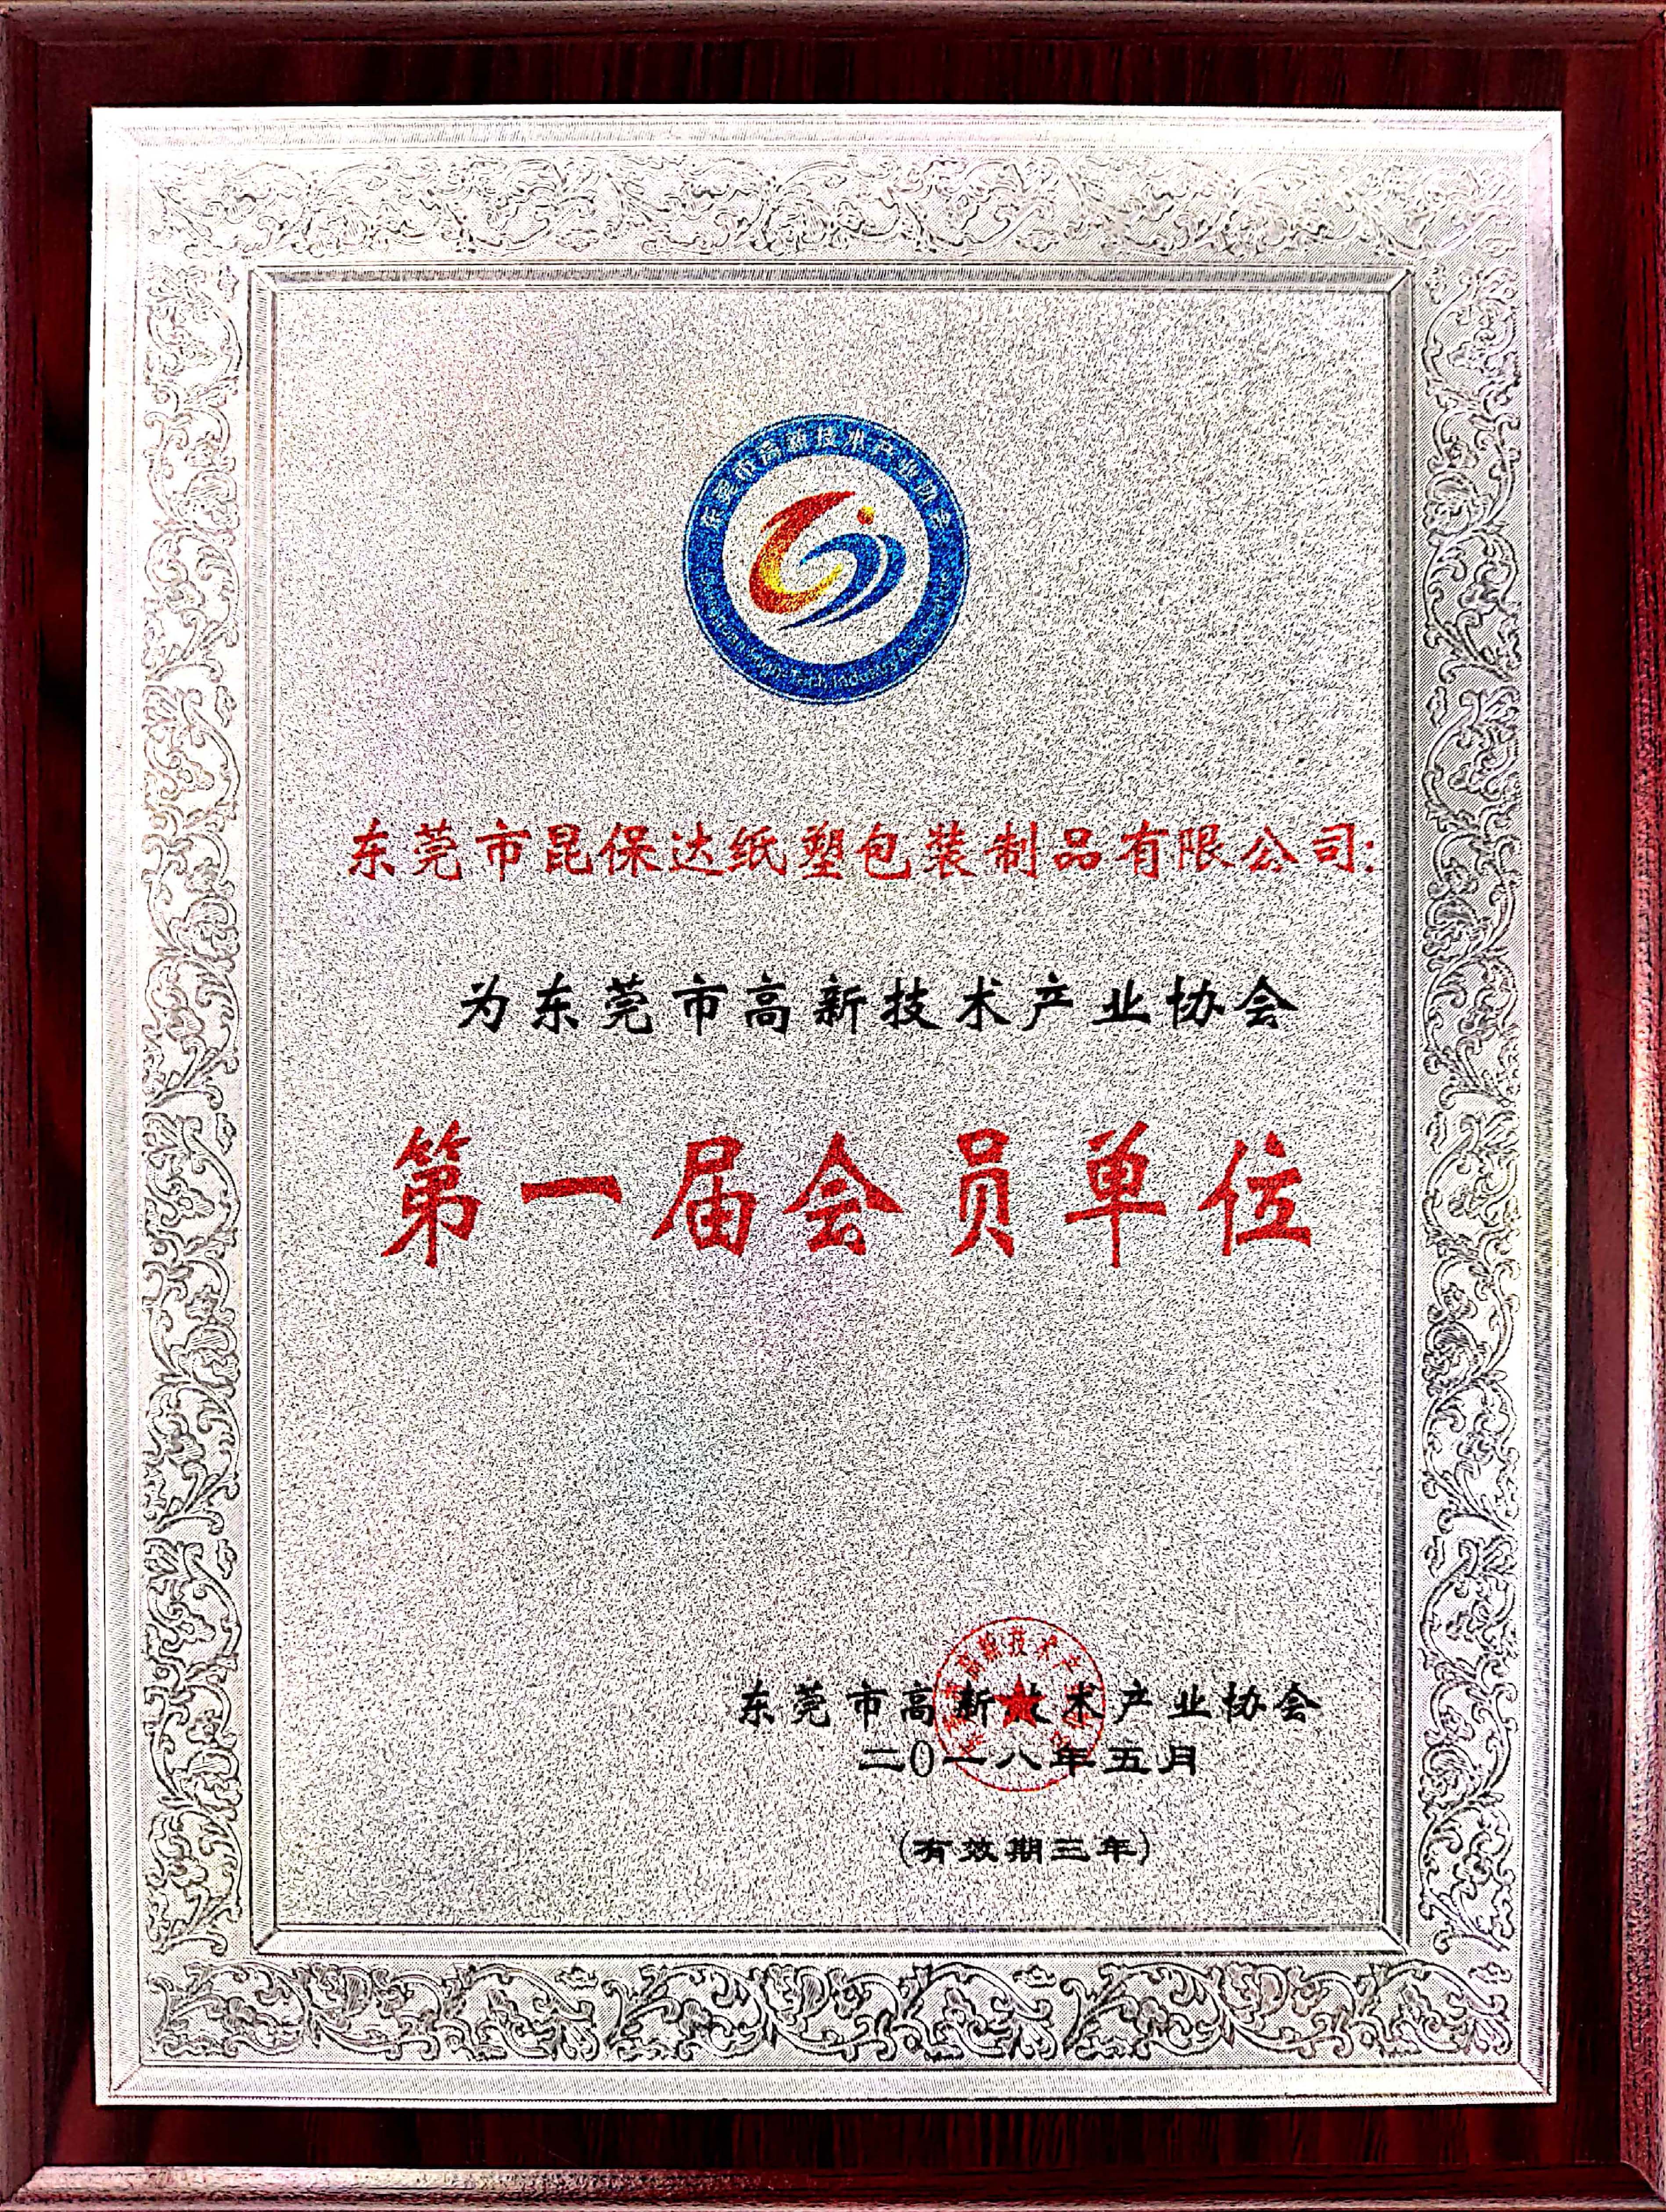 Honorary certificate of member of hi tech Industry Association